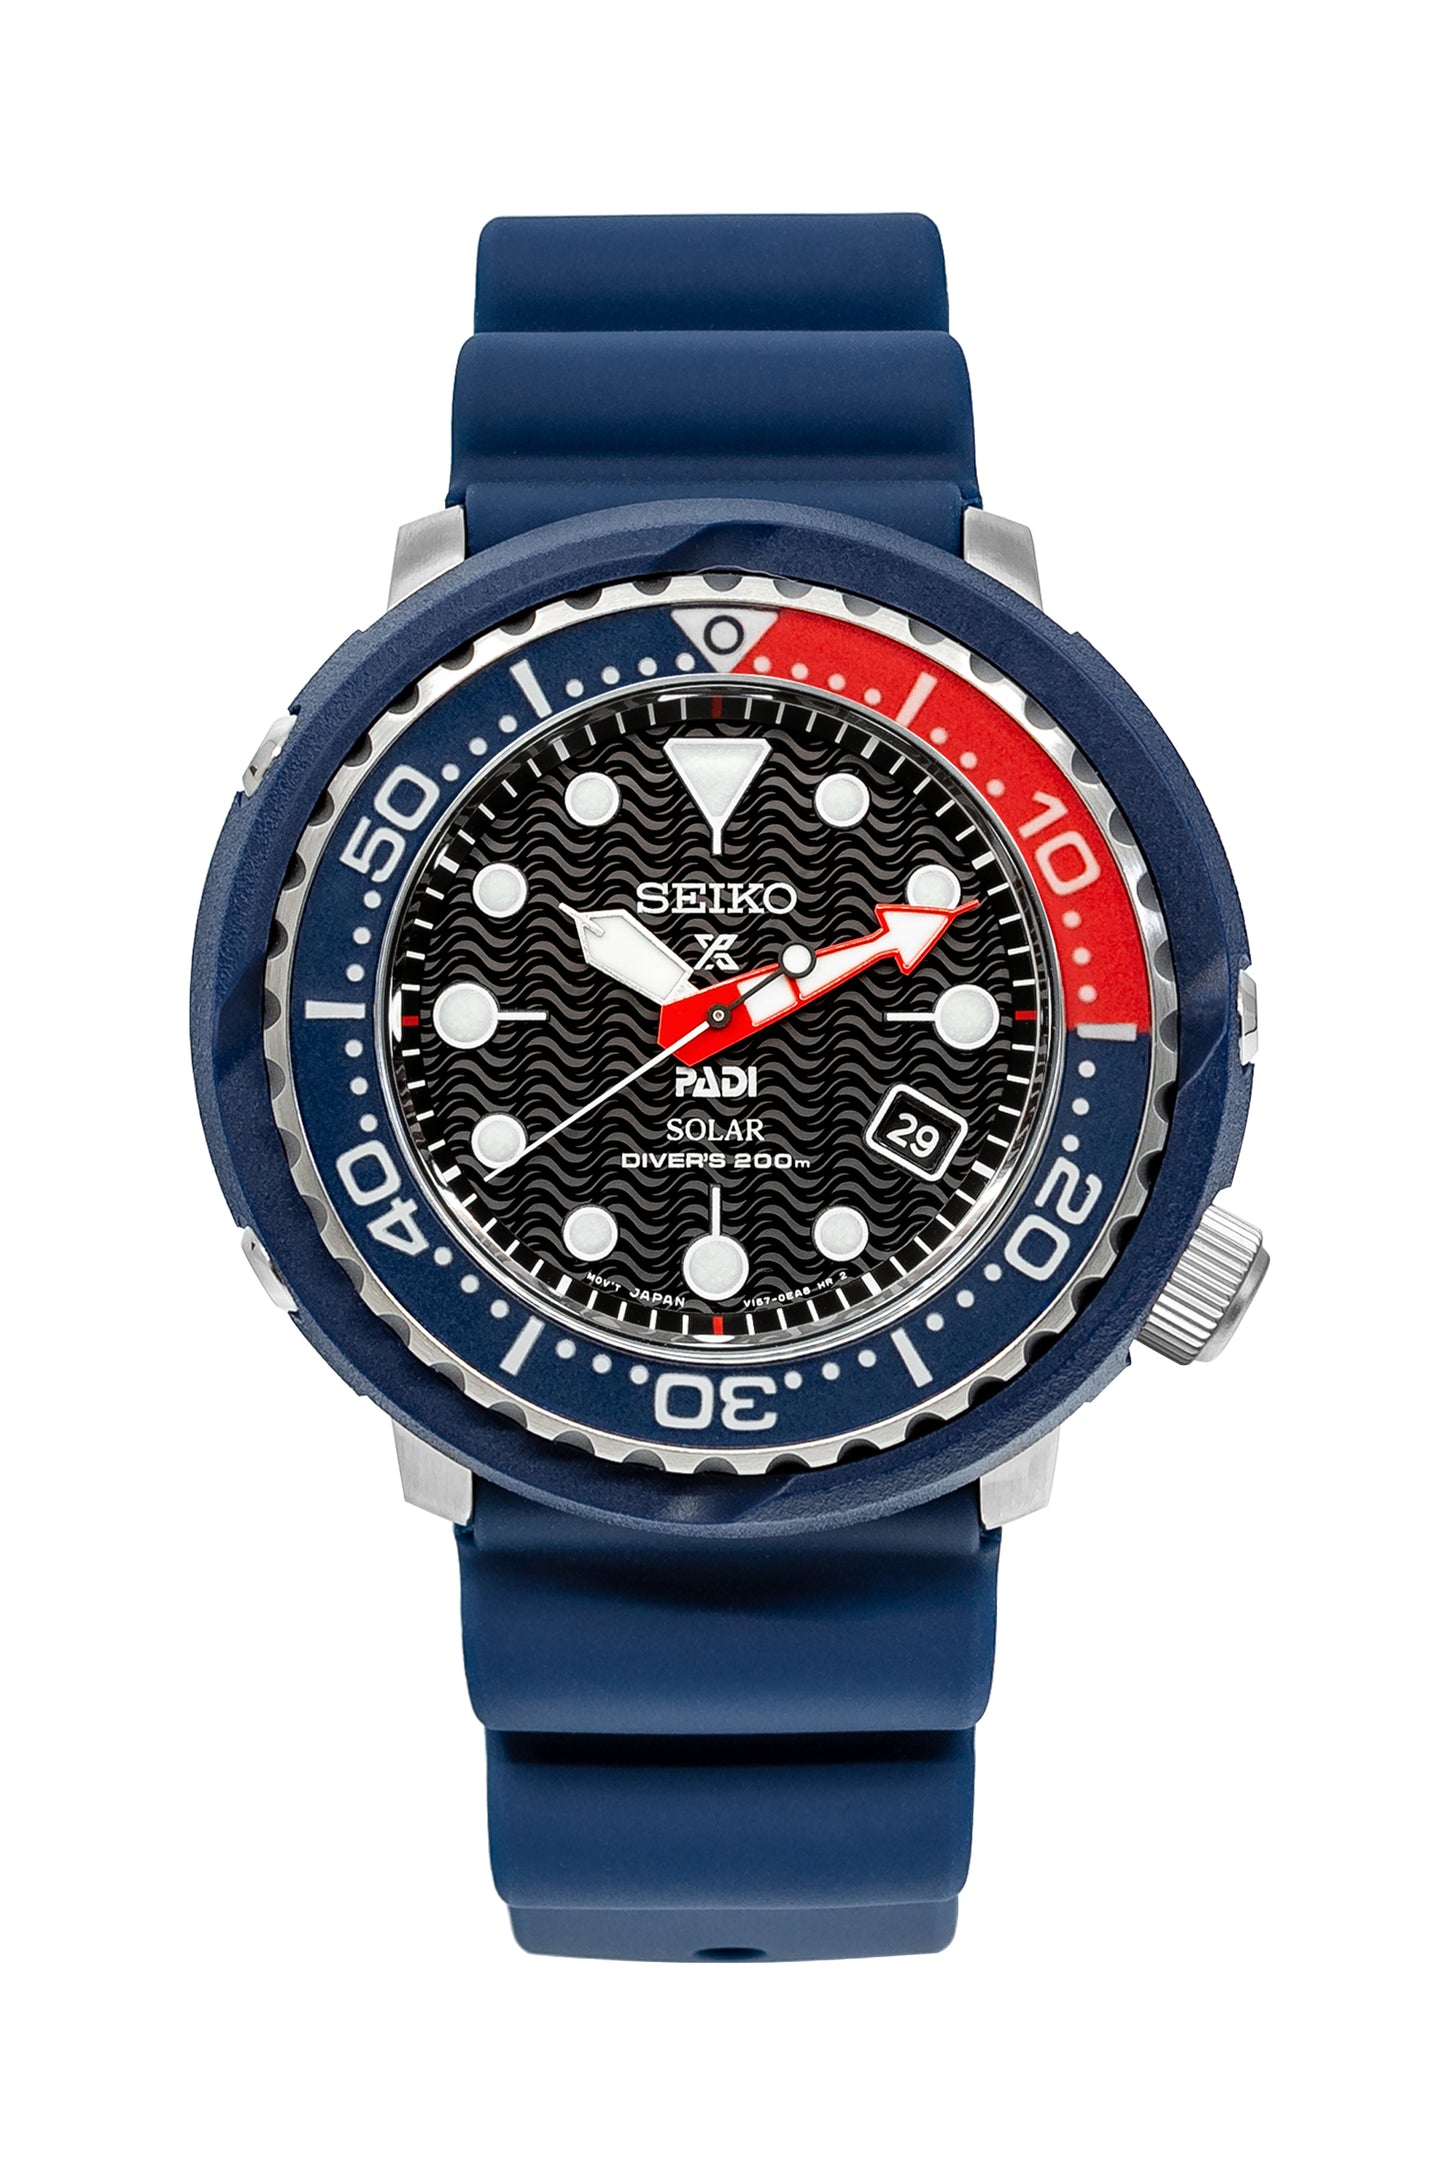 SEIKO SNE499P1 Prospex PADI Solar Men's Diver Watch – Black Dial